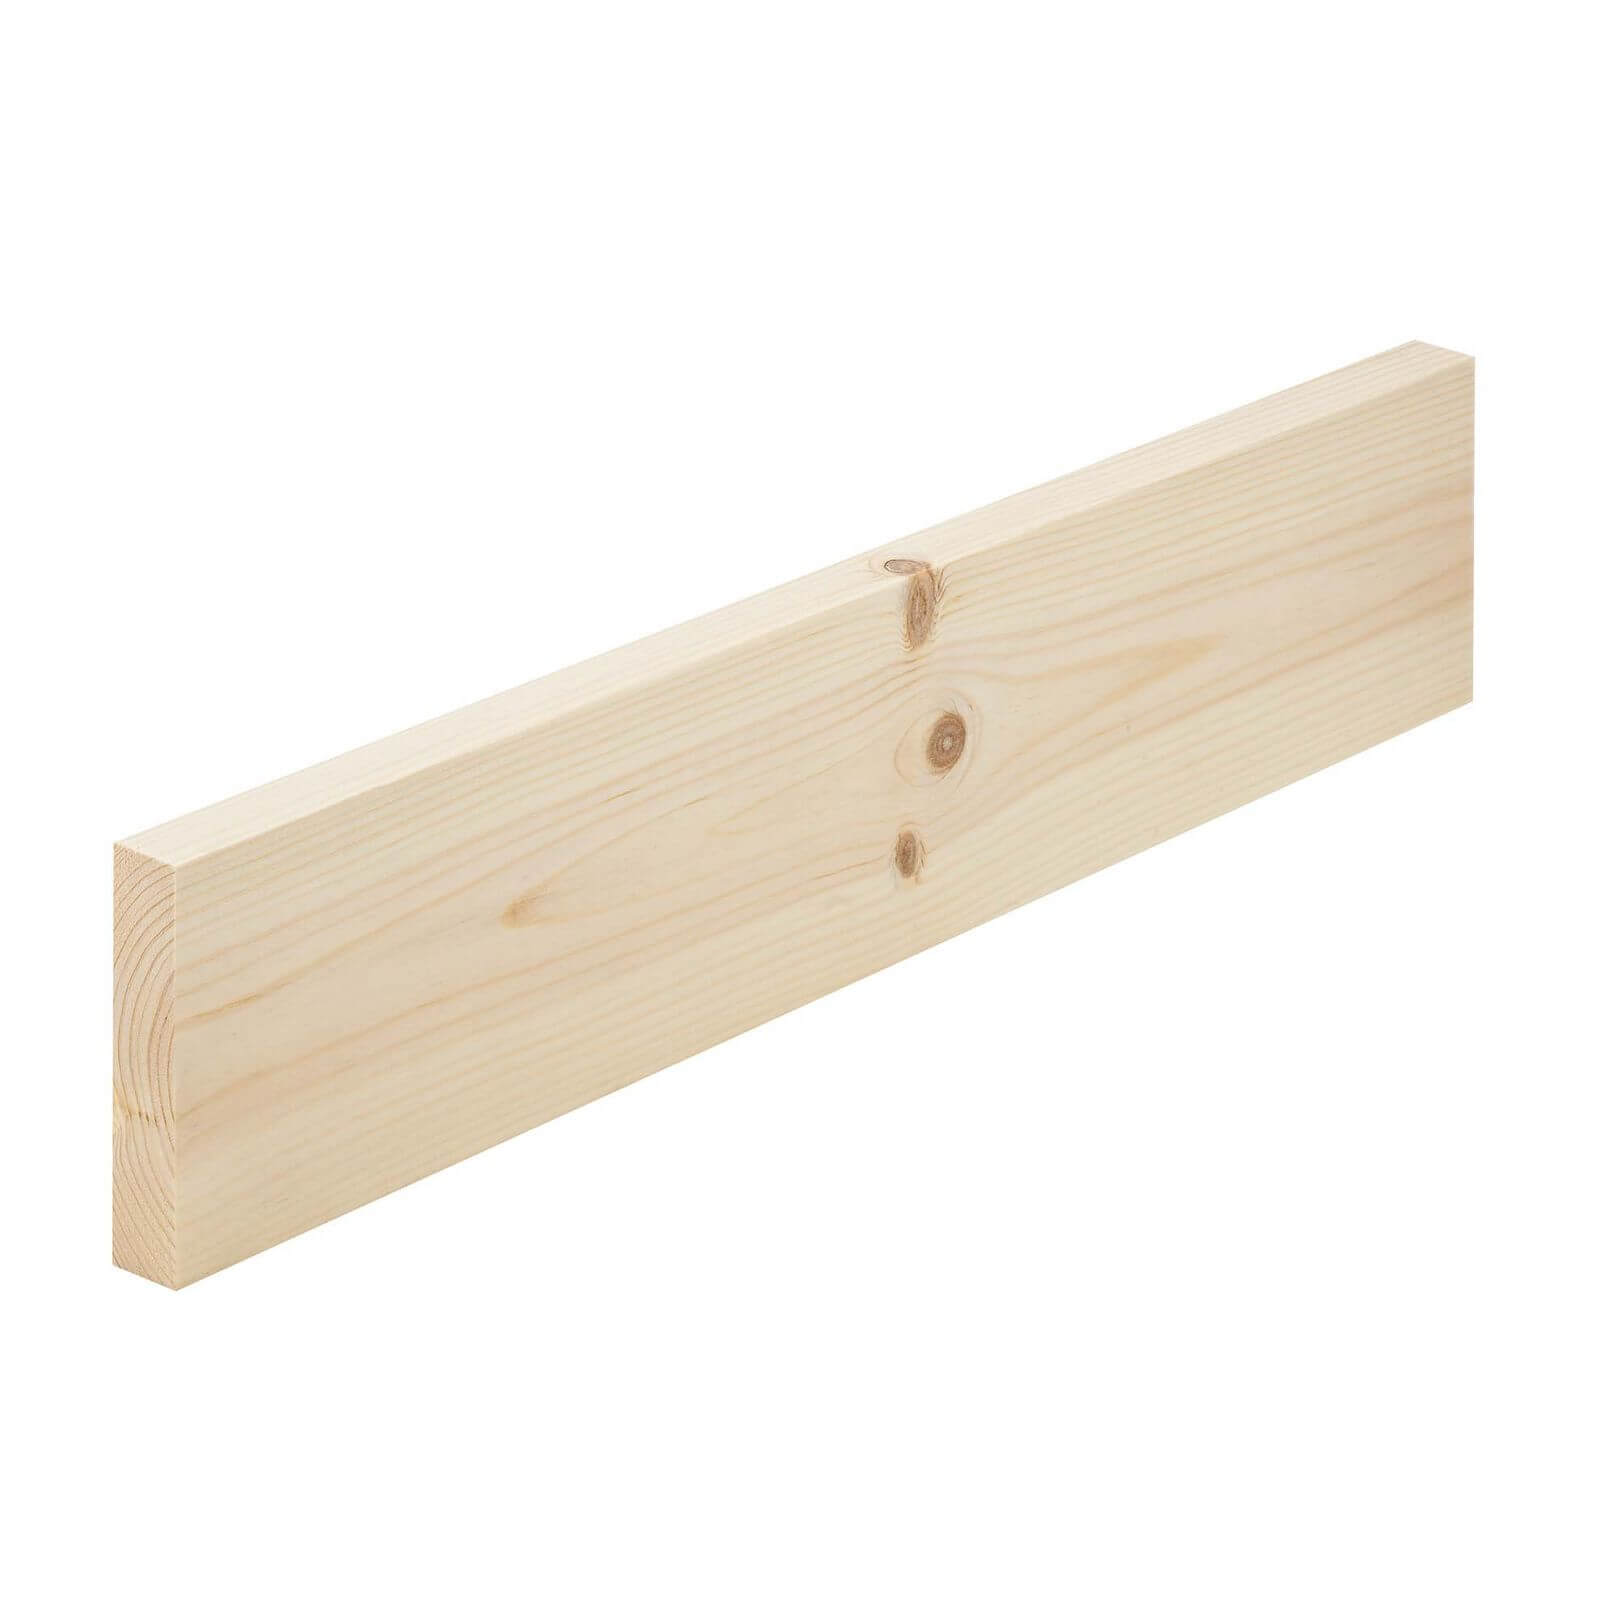 Metsa Planed Square Edge Stick Softwood Timber 2.4m (18 x 94 x 2400mm)